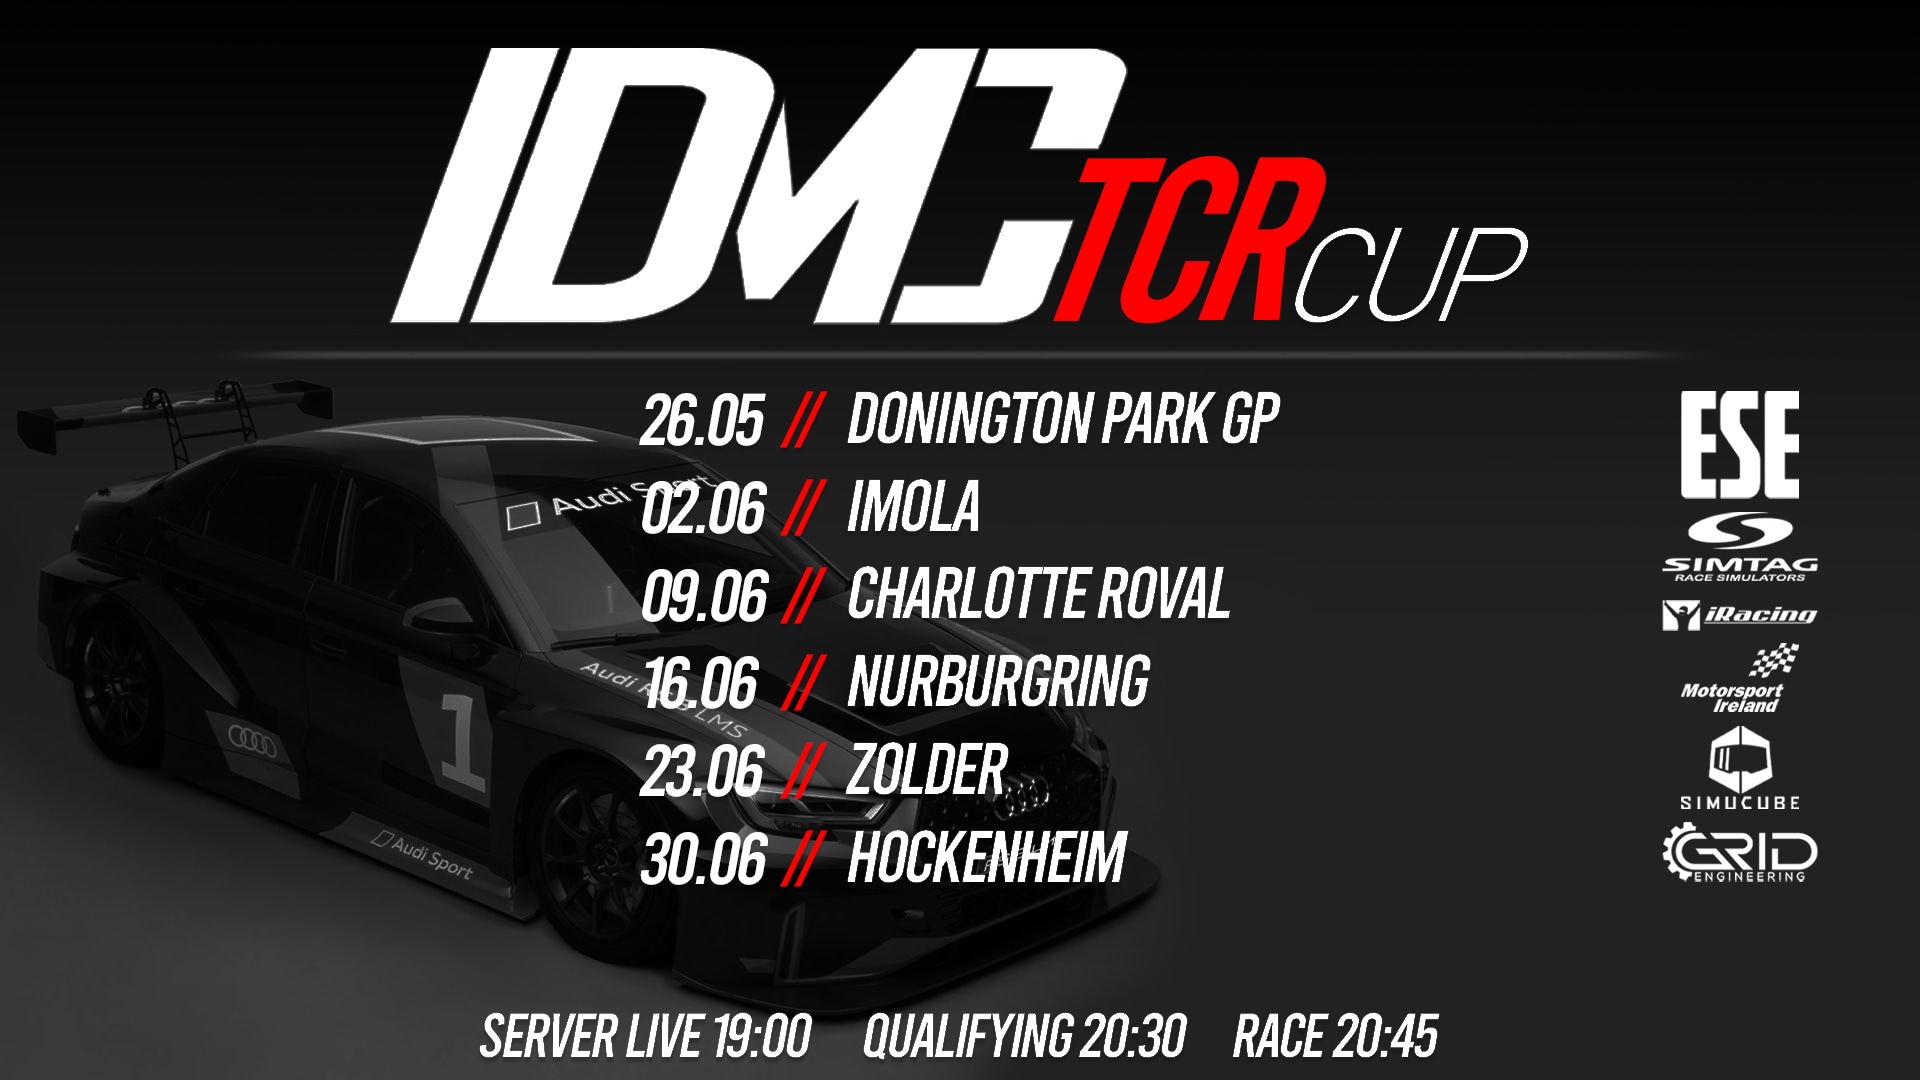 iDMC TCR Spring Series Entry - 1